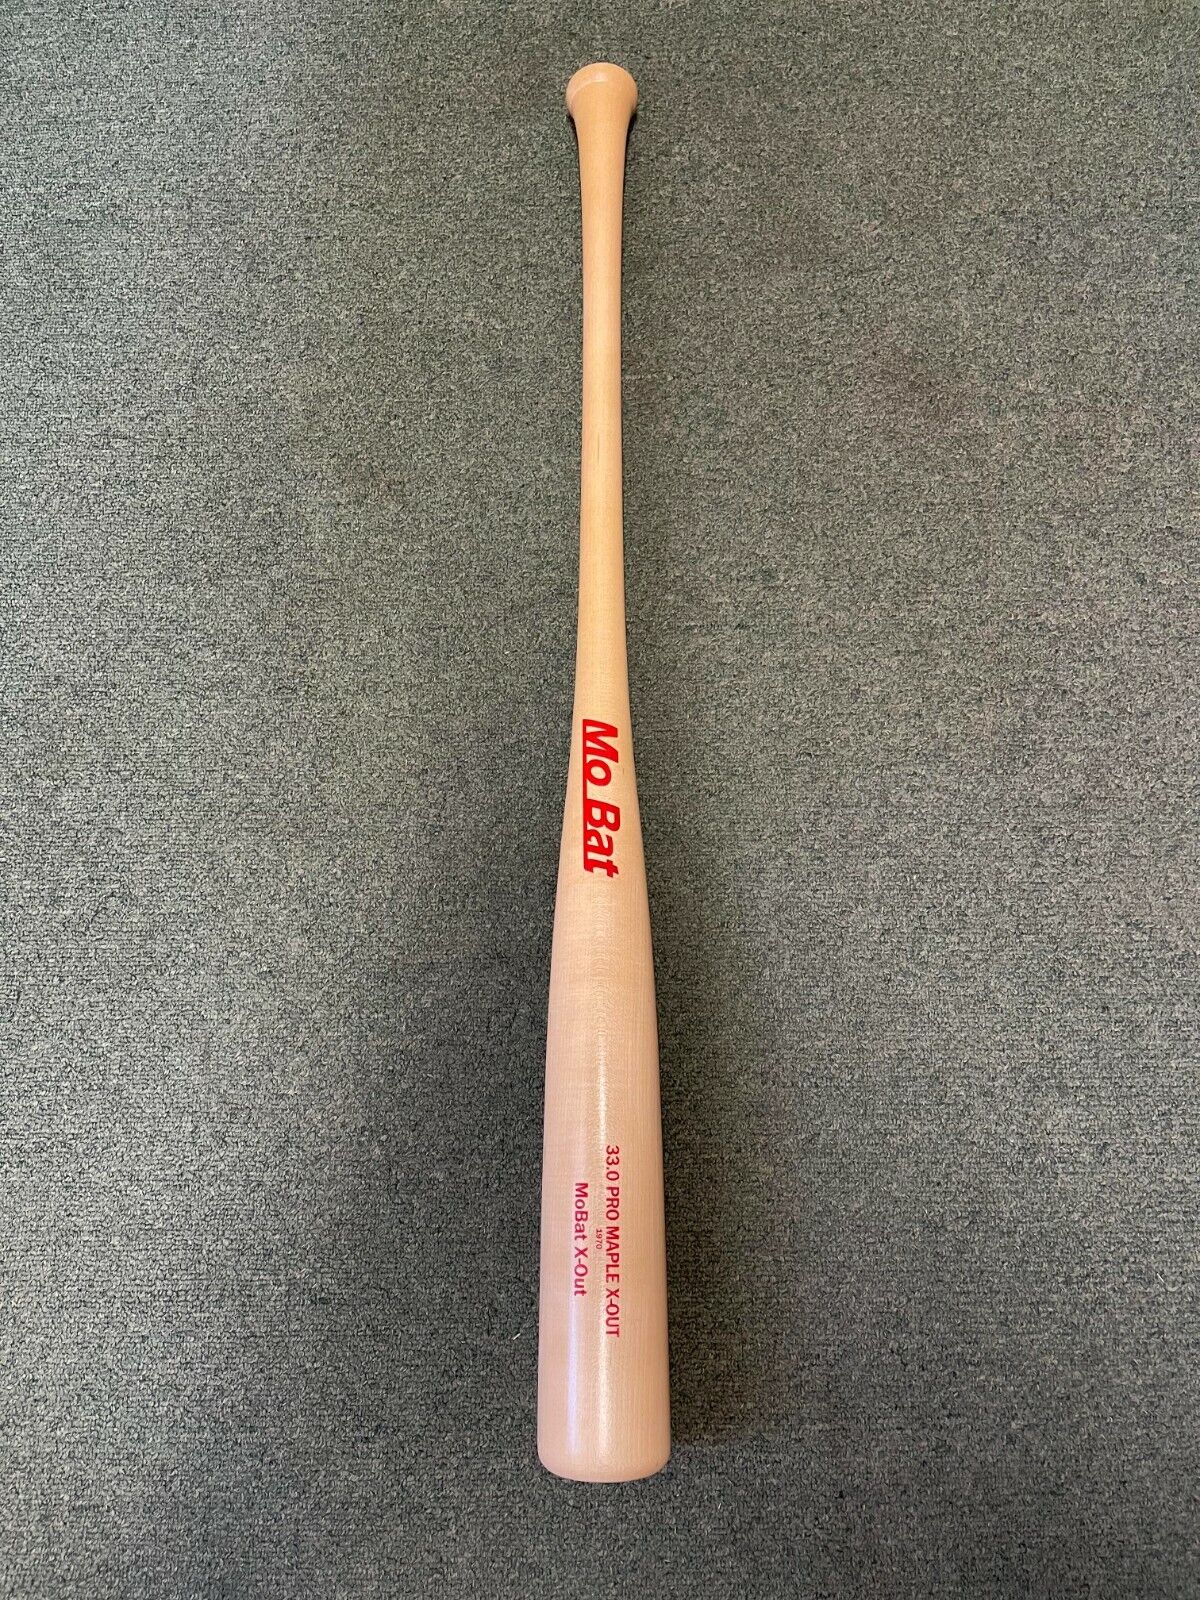 Color:Solid Natural/Red Label:*Old Hickory Bat Co. Made* *MoBat Co. Pro Label* MAPLE/ASH WOOD Baseball Bats